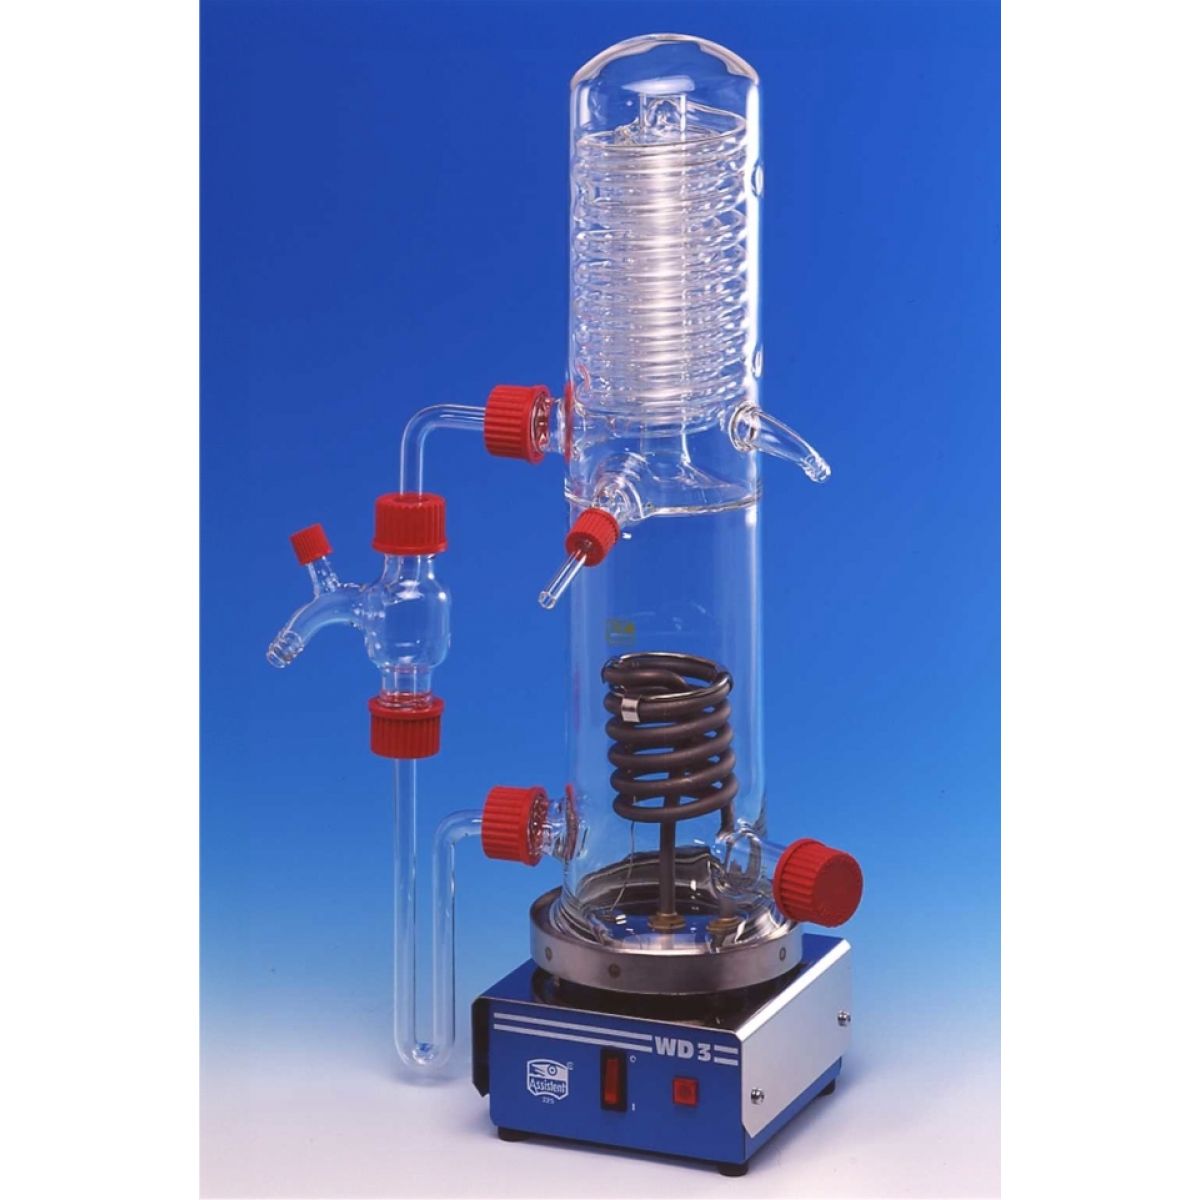 Аппарат вод 9. Дистиллированная вода аппарат. Wagner Vertical Unit vu-2 комплектующие. Дистиллированная вода в микробиологии. Вод 9 аппарат.